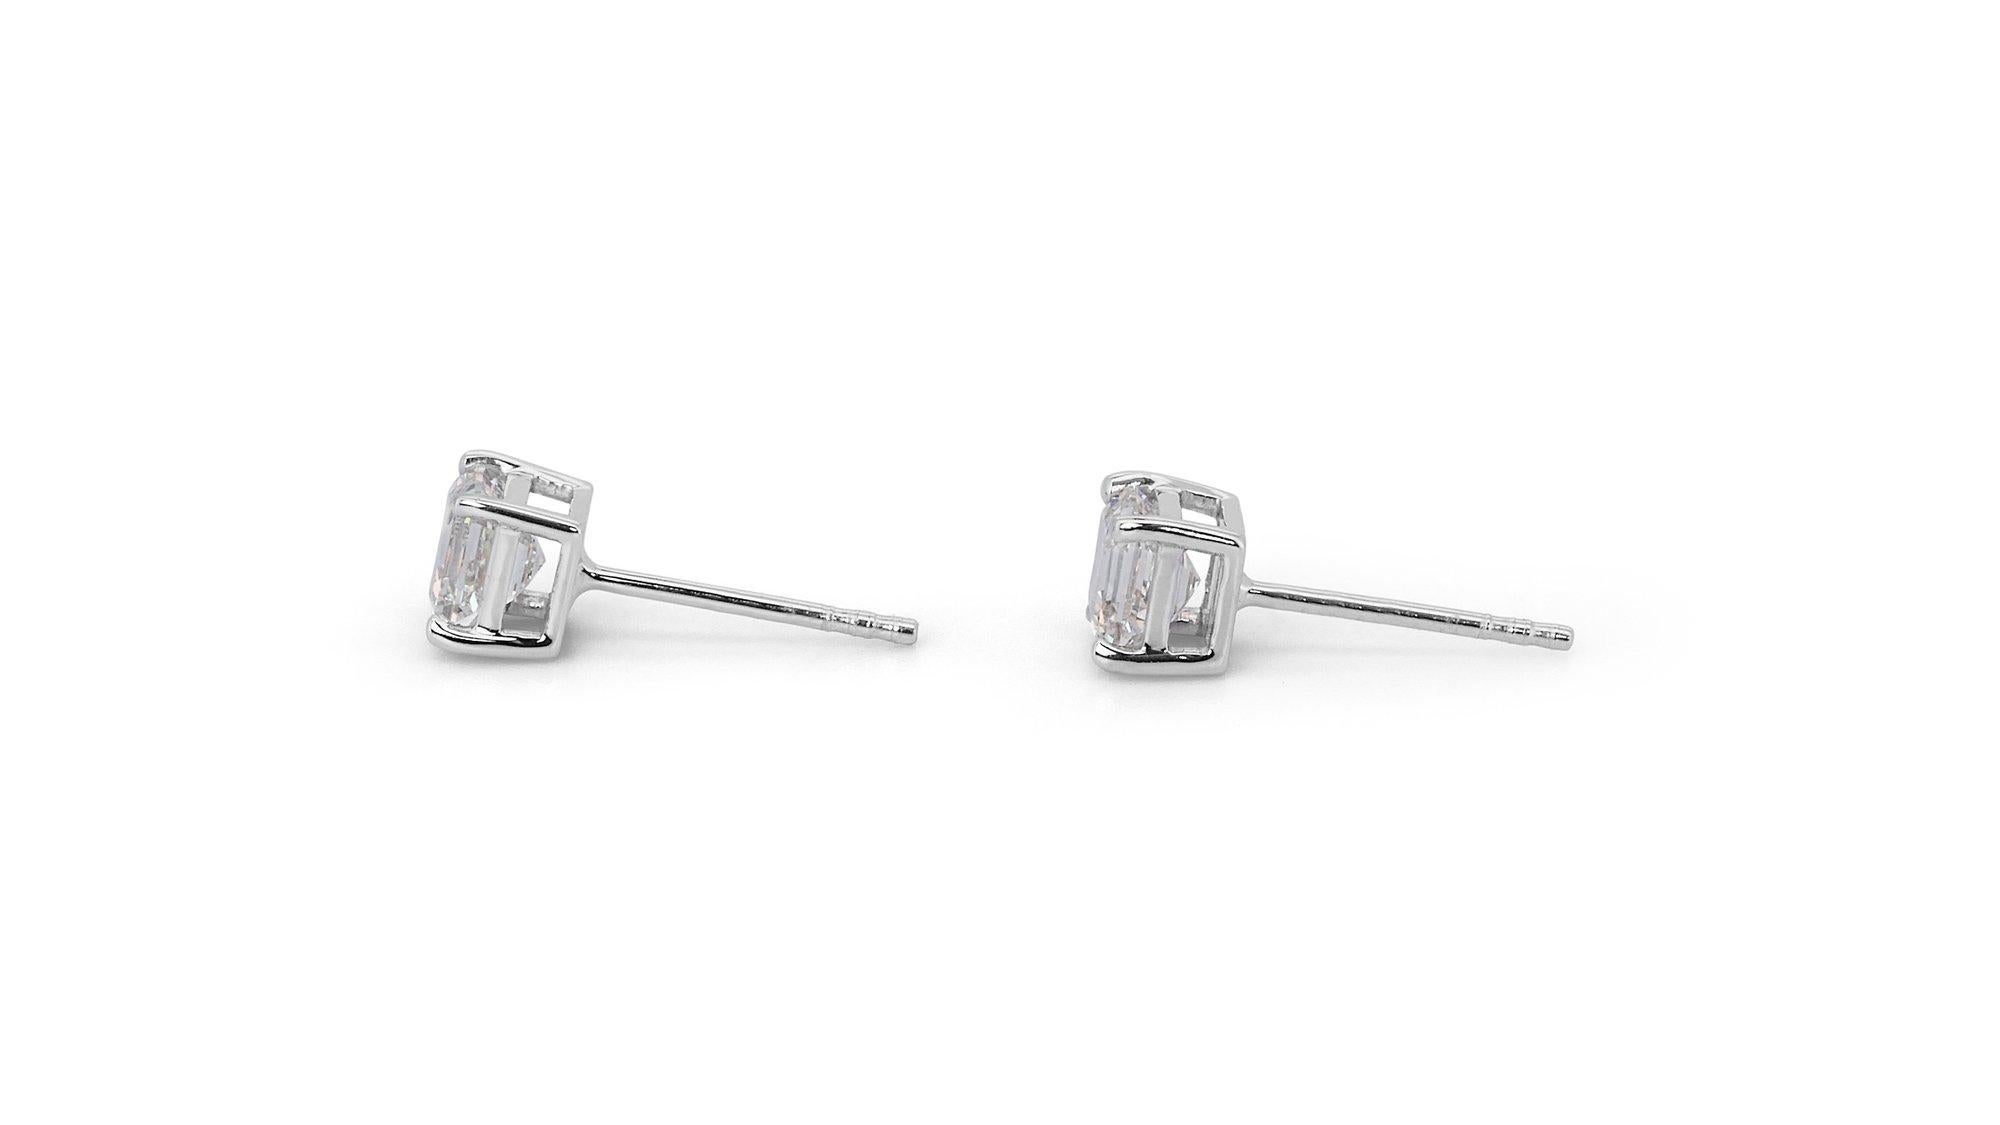 Beautiful pair of stud earrings with a dazzling 1.3 carat Asscher cut diamonds 3